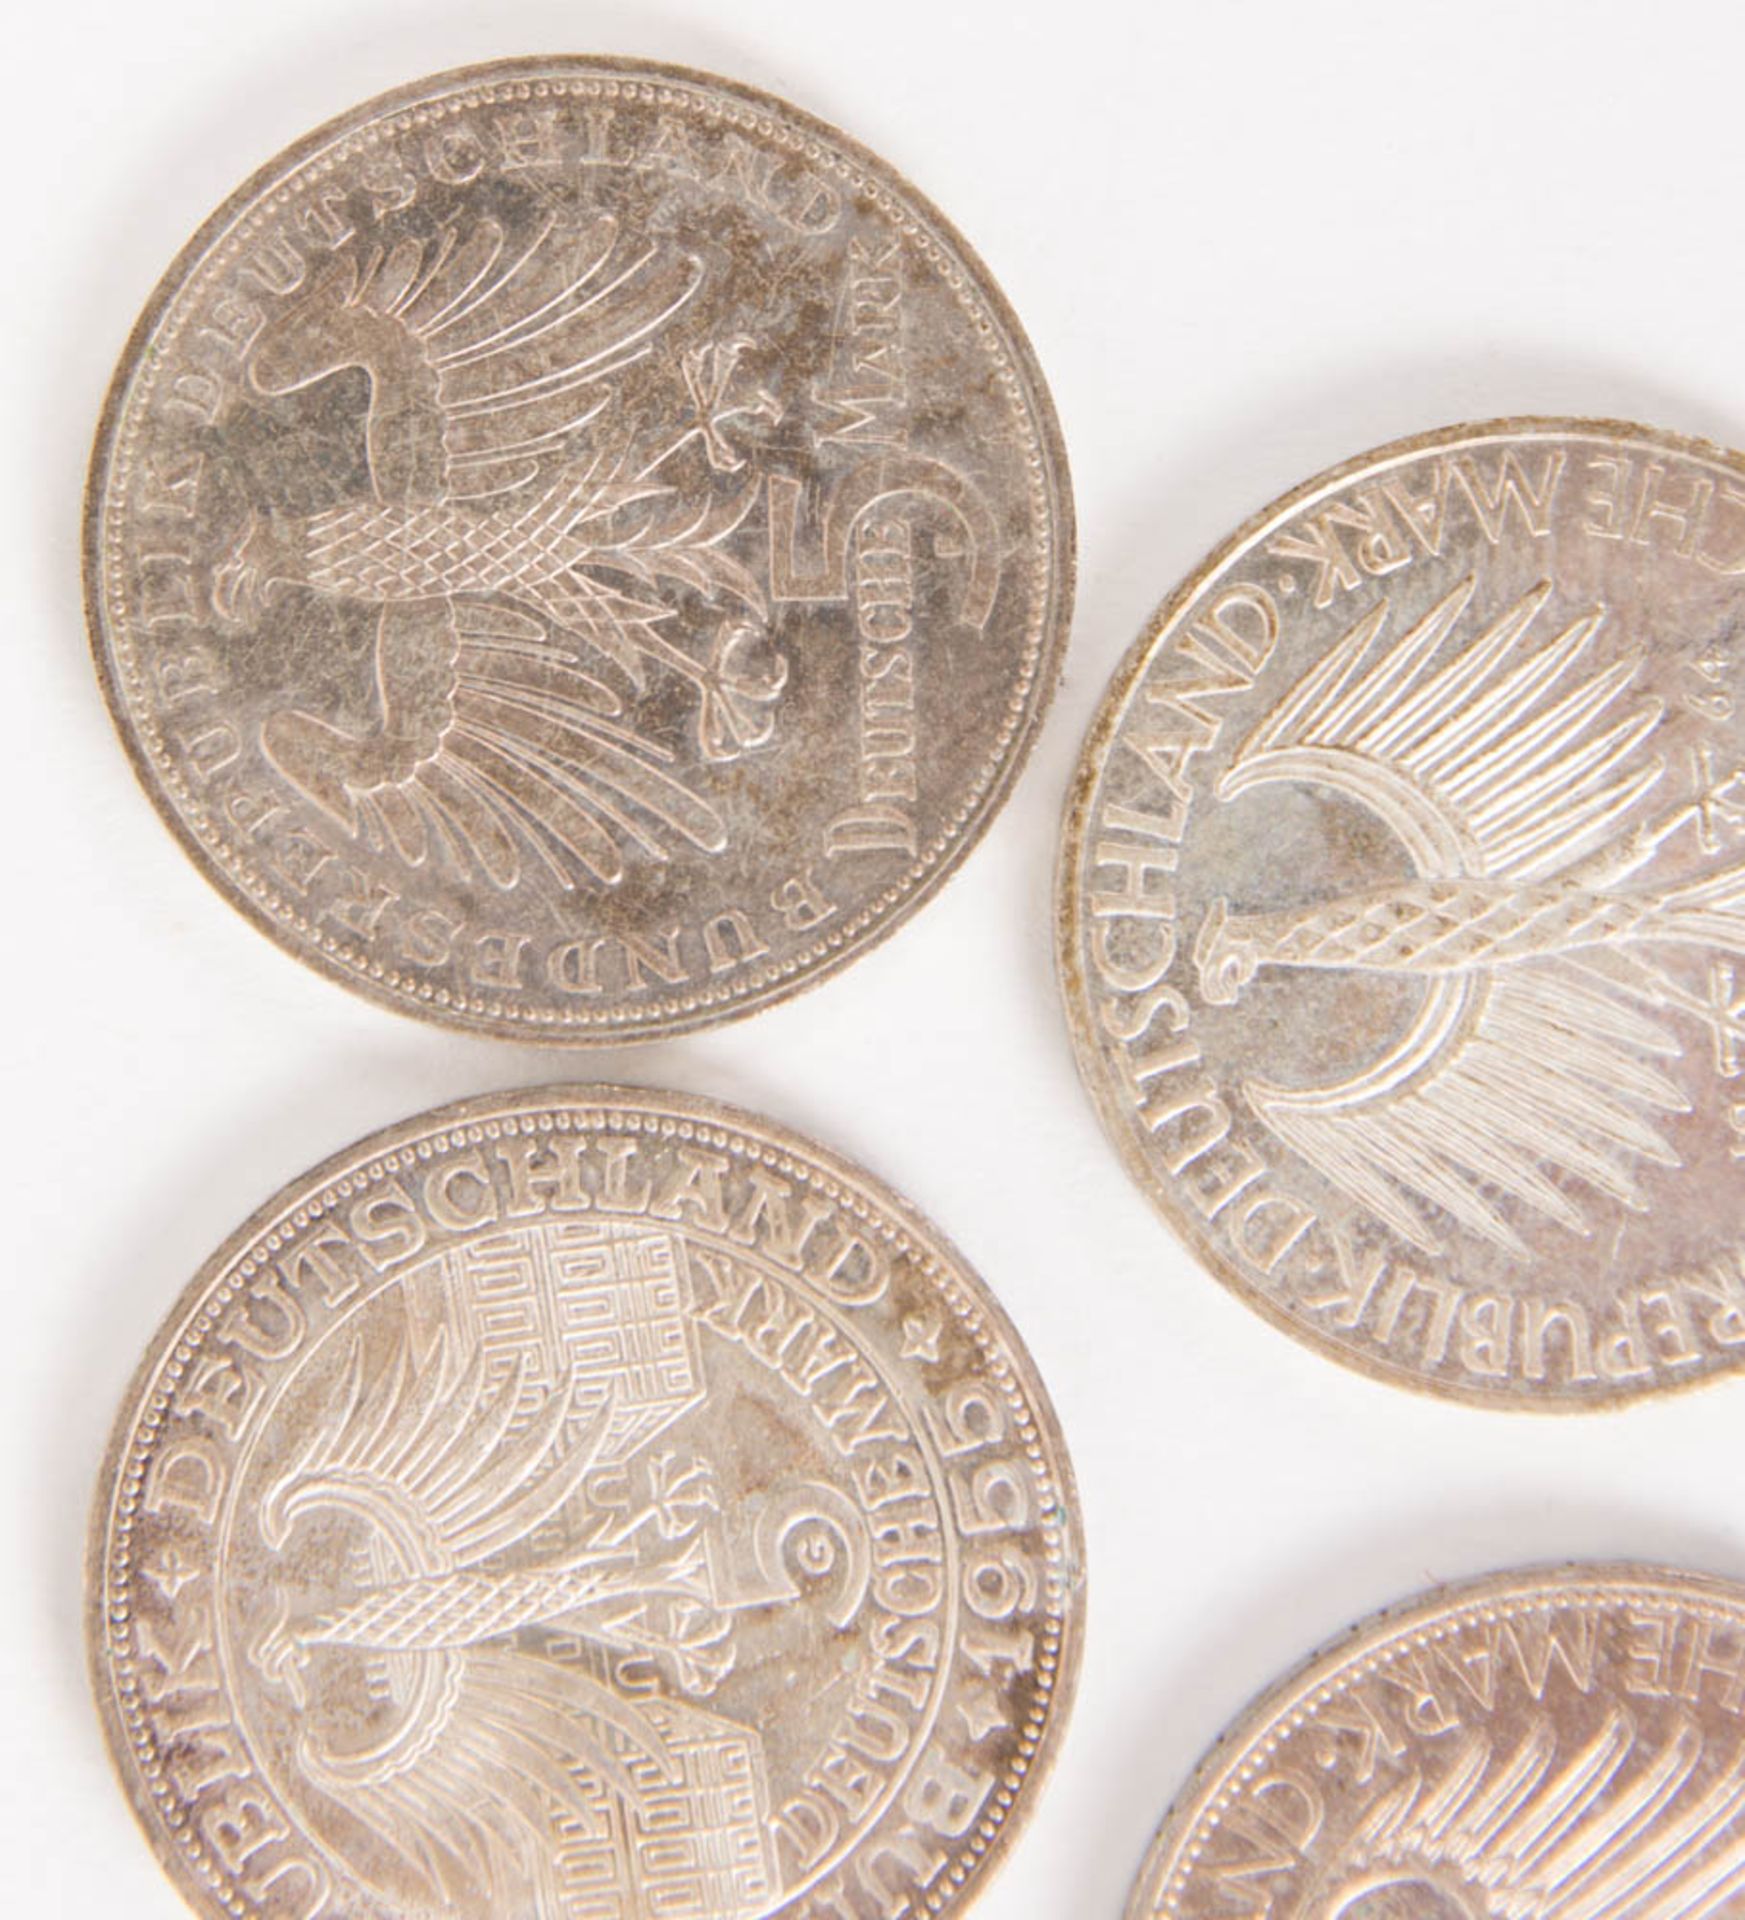 BRD: 5 DM Gedenkmünzen "Top five" 1952-1964. - Bild 6 aus 6